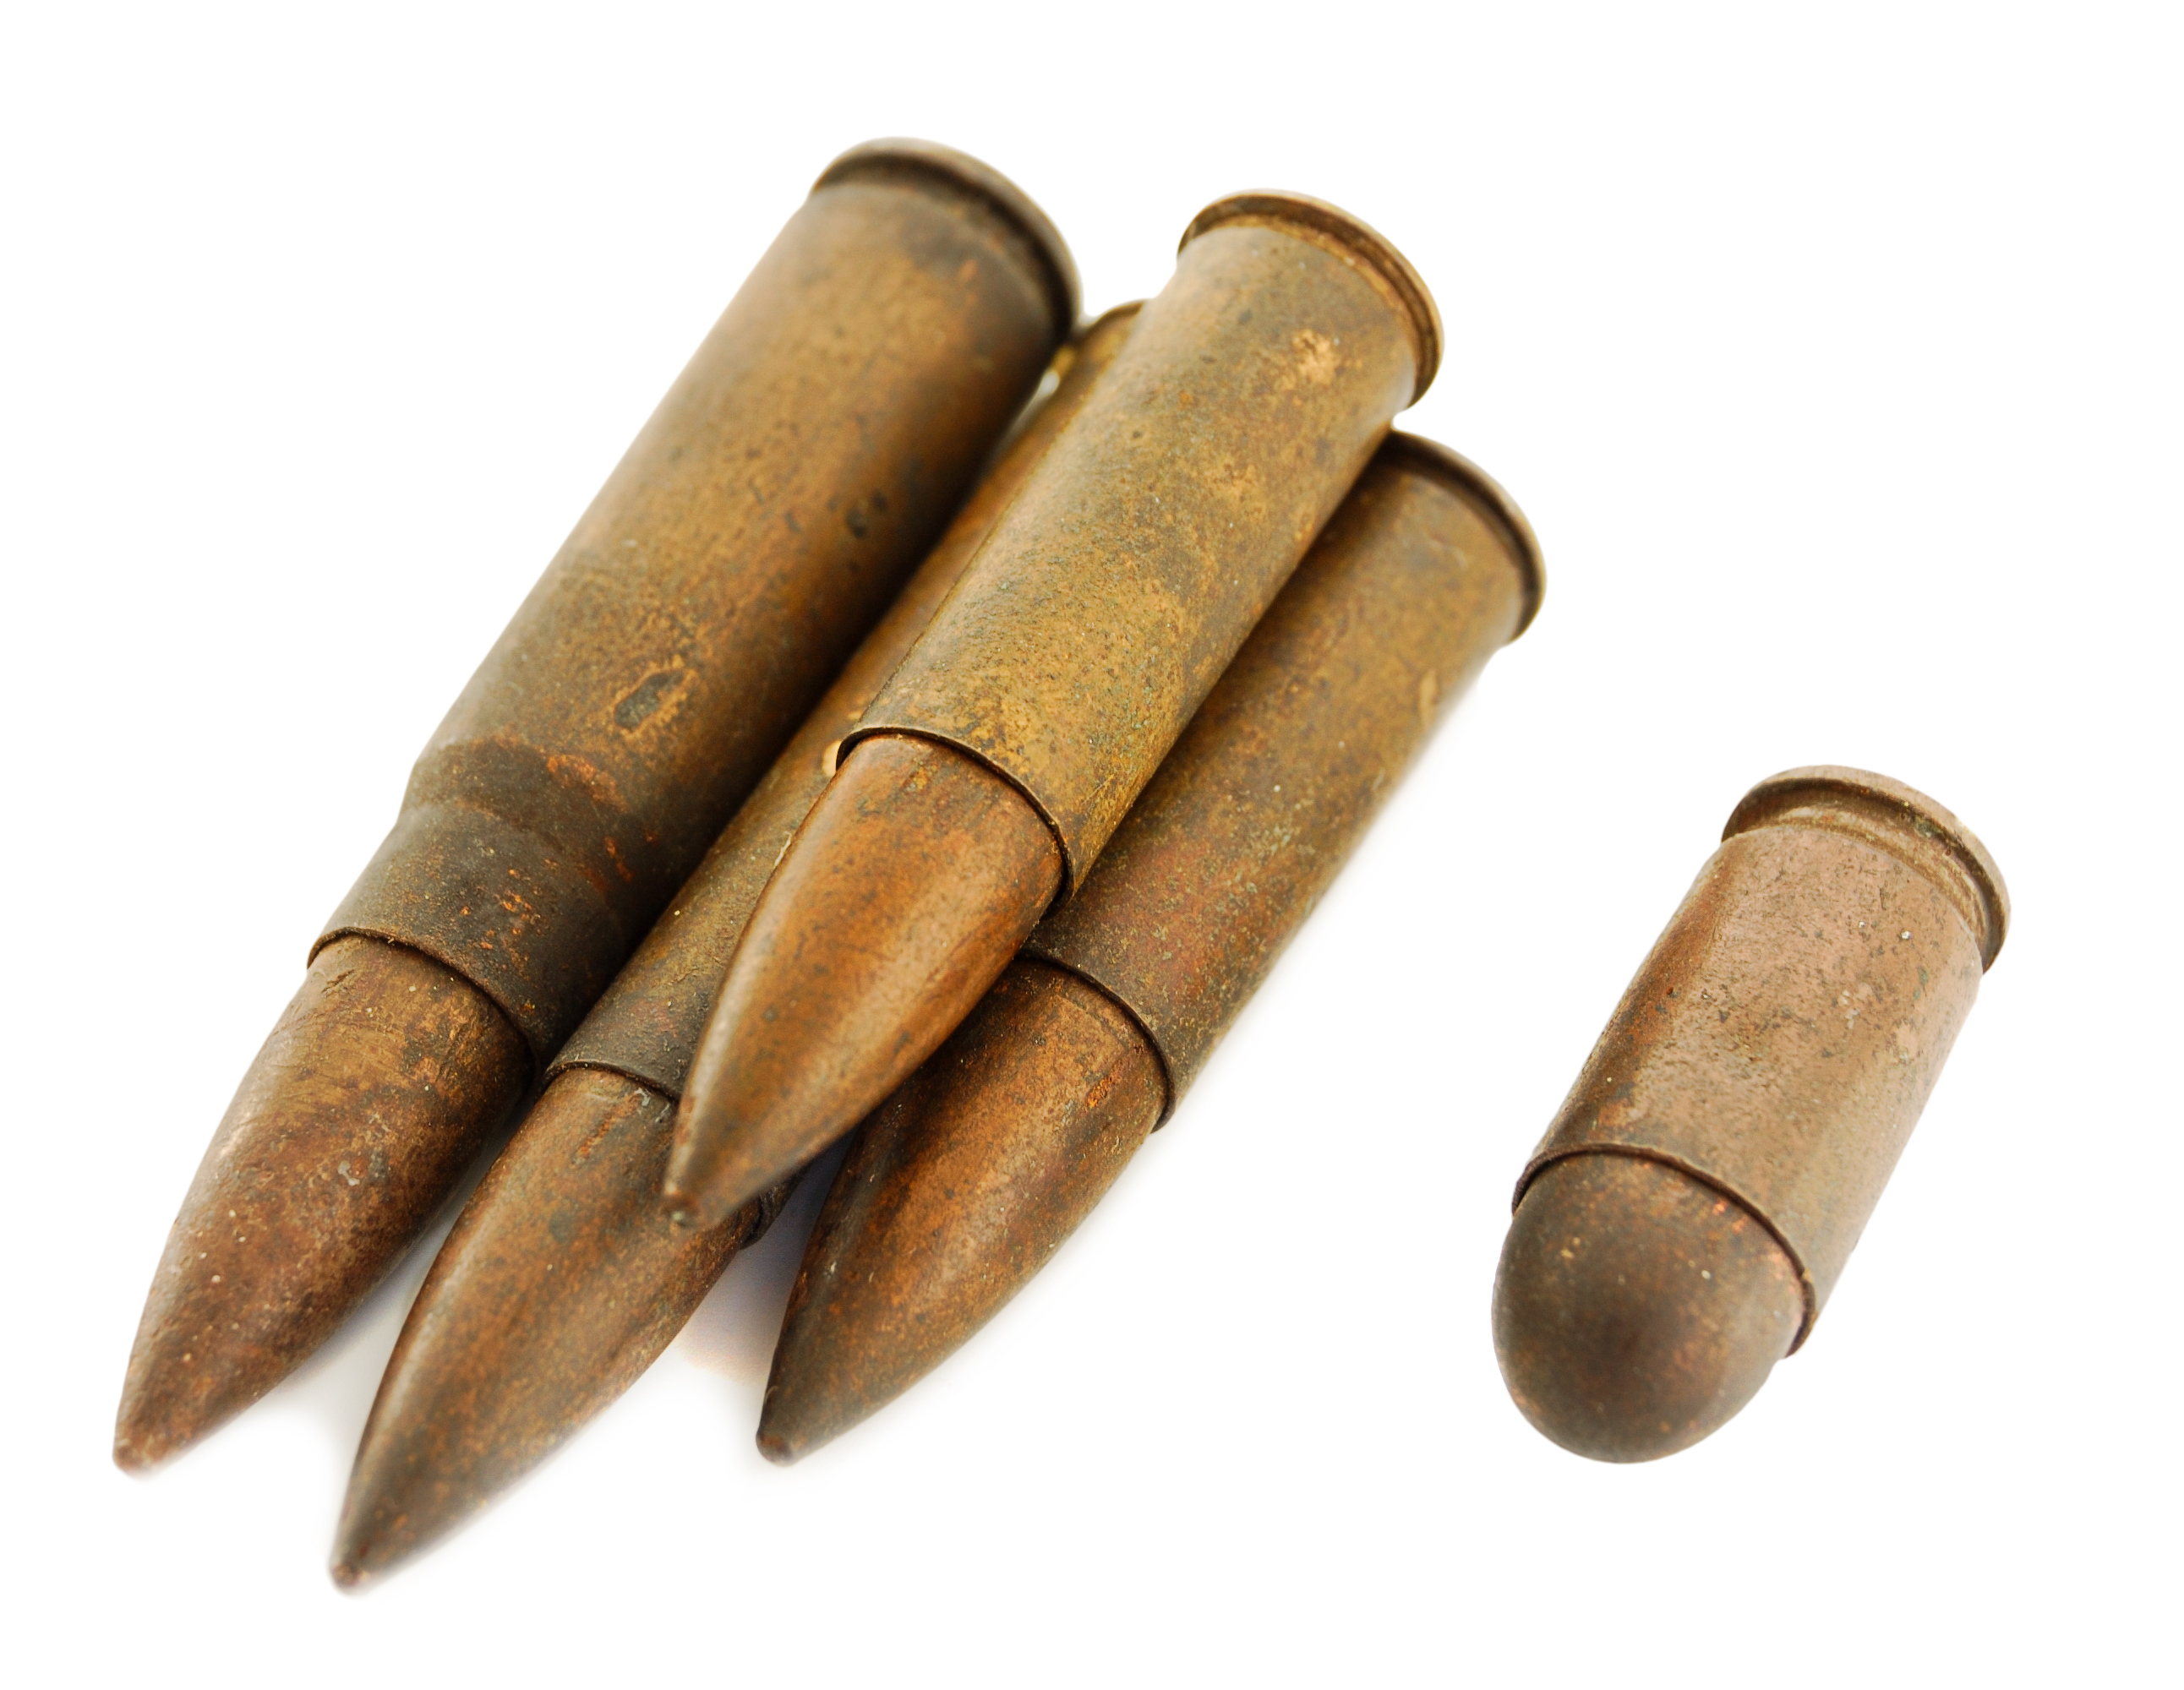 Set of old shells from World War II. (Shutterstock/Mettus)